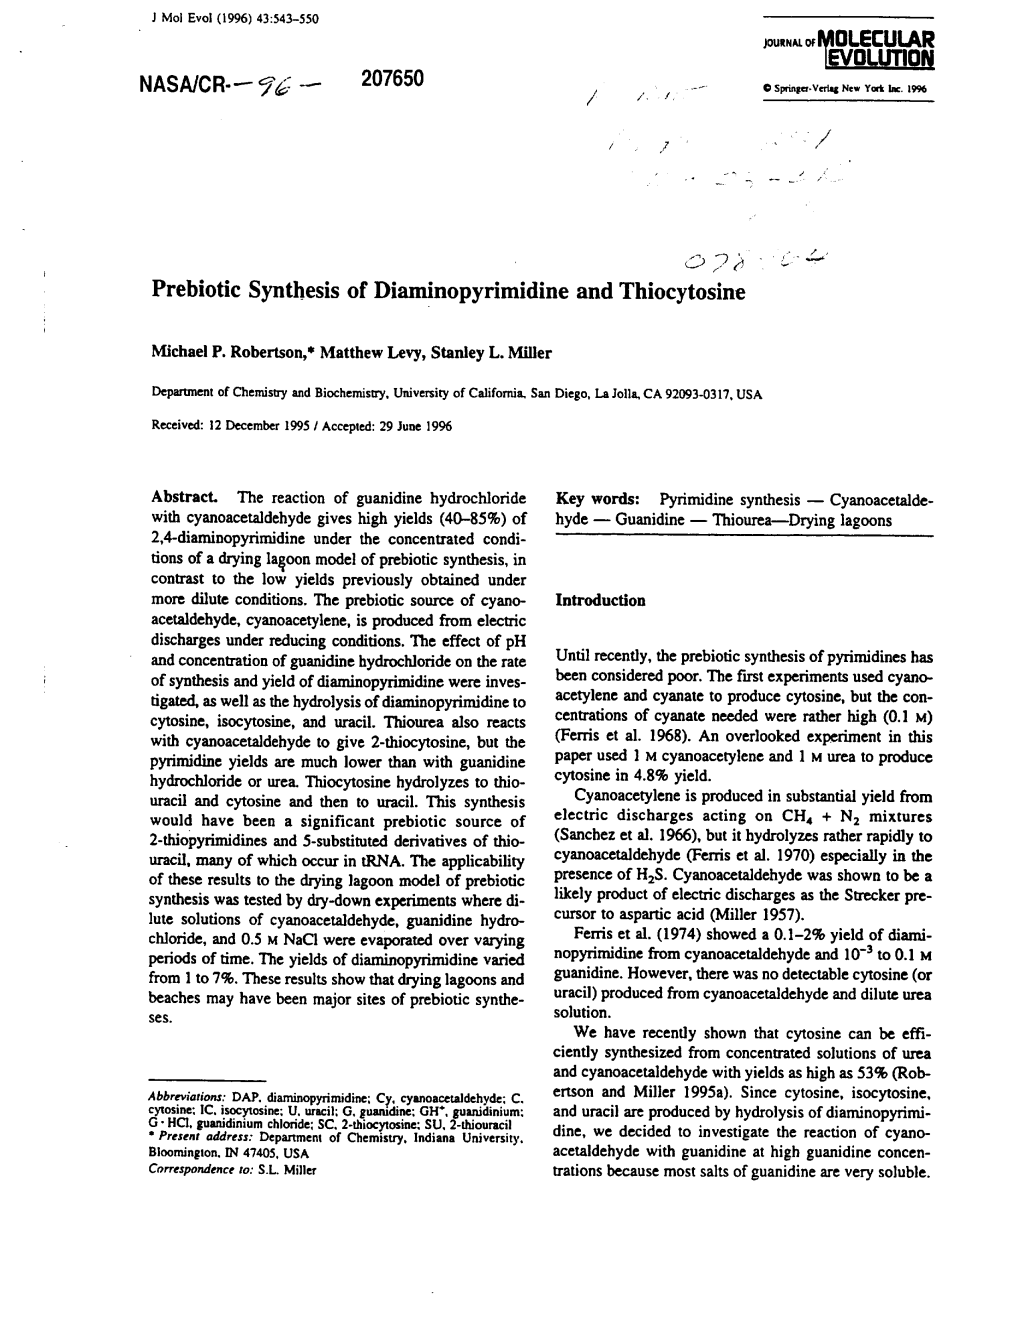 207650 / Prebiotic Synthesis of Diaminopyrimidine And